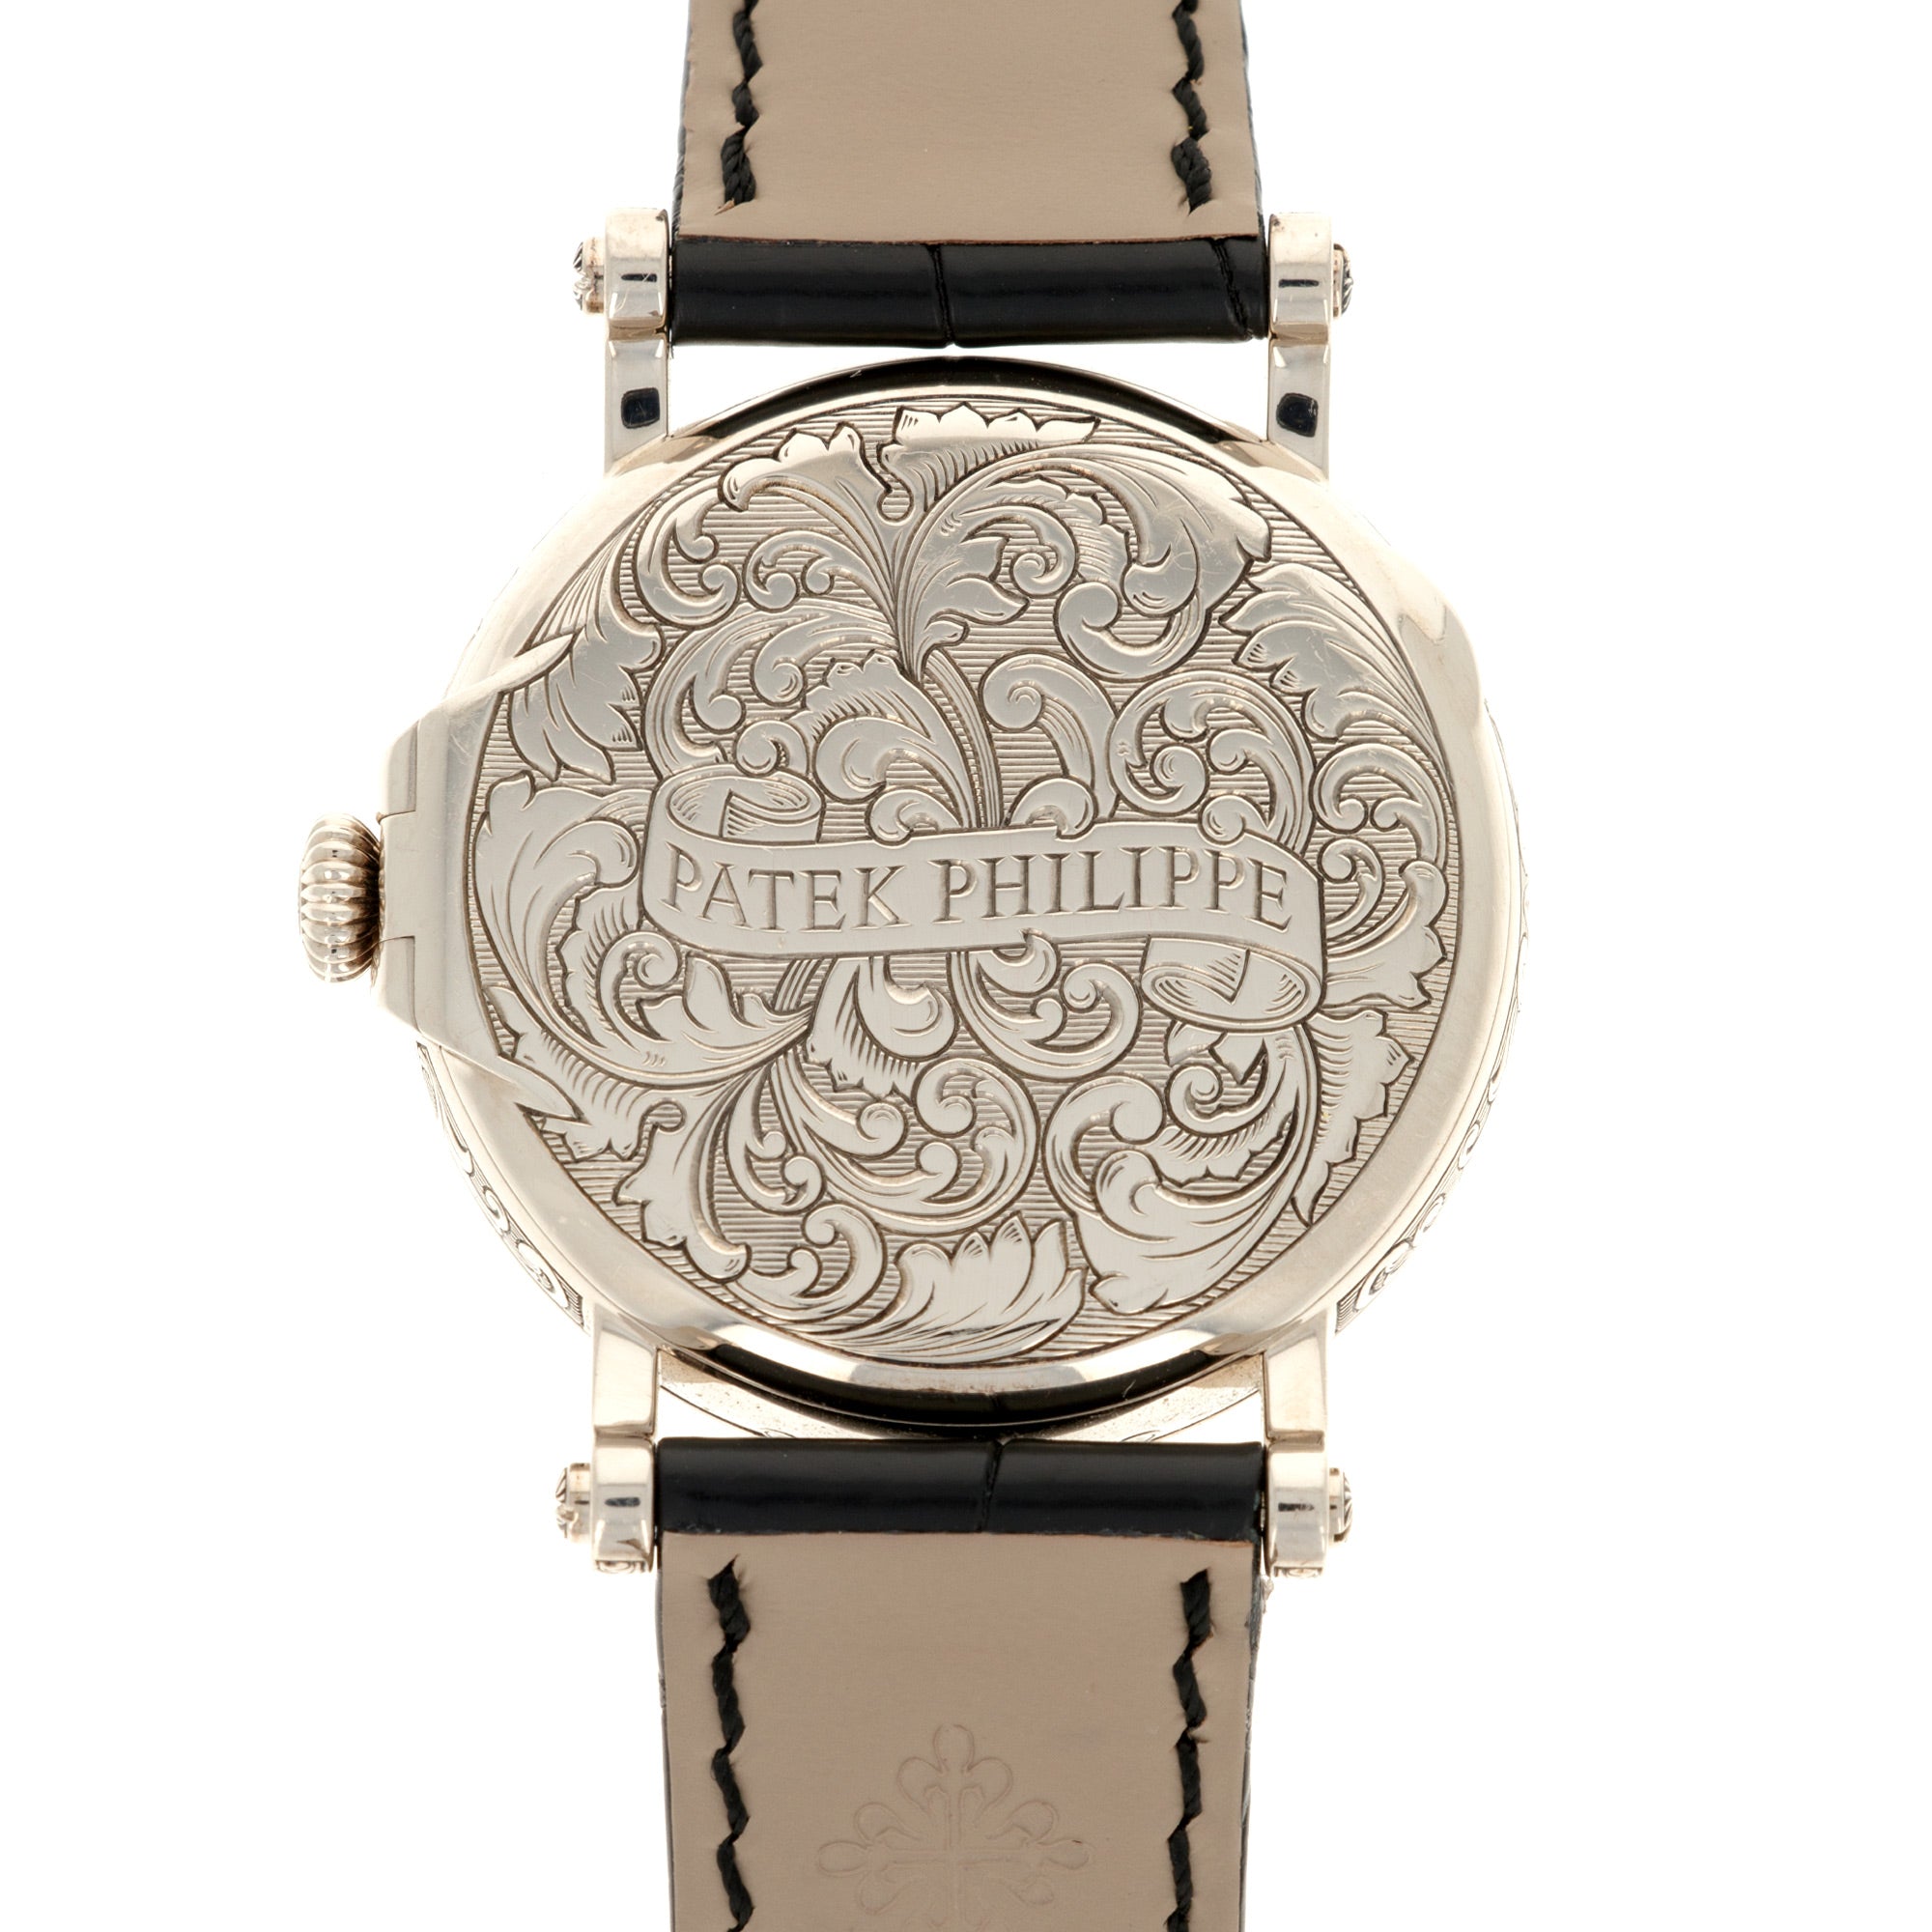 Patek Philippe - Patek Philippe White Gold Perpetual Engraved Ref. 5160 - The Keystone Watches